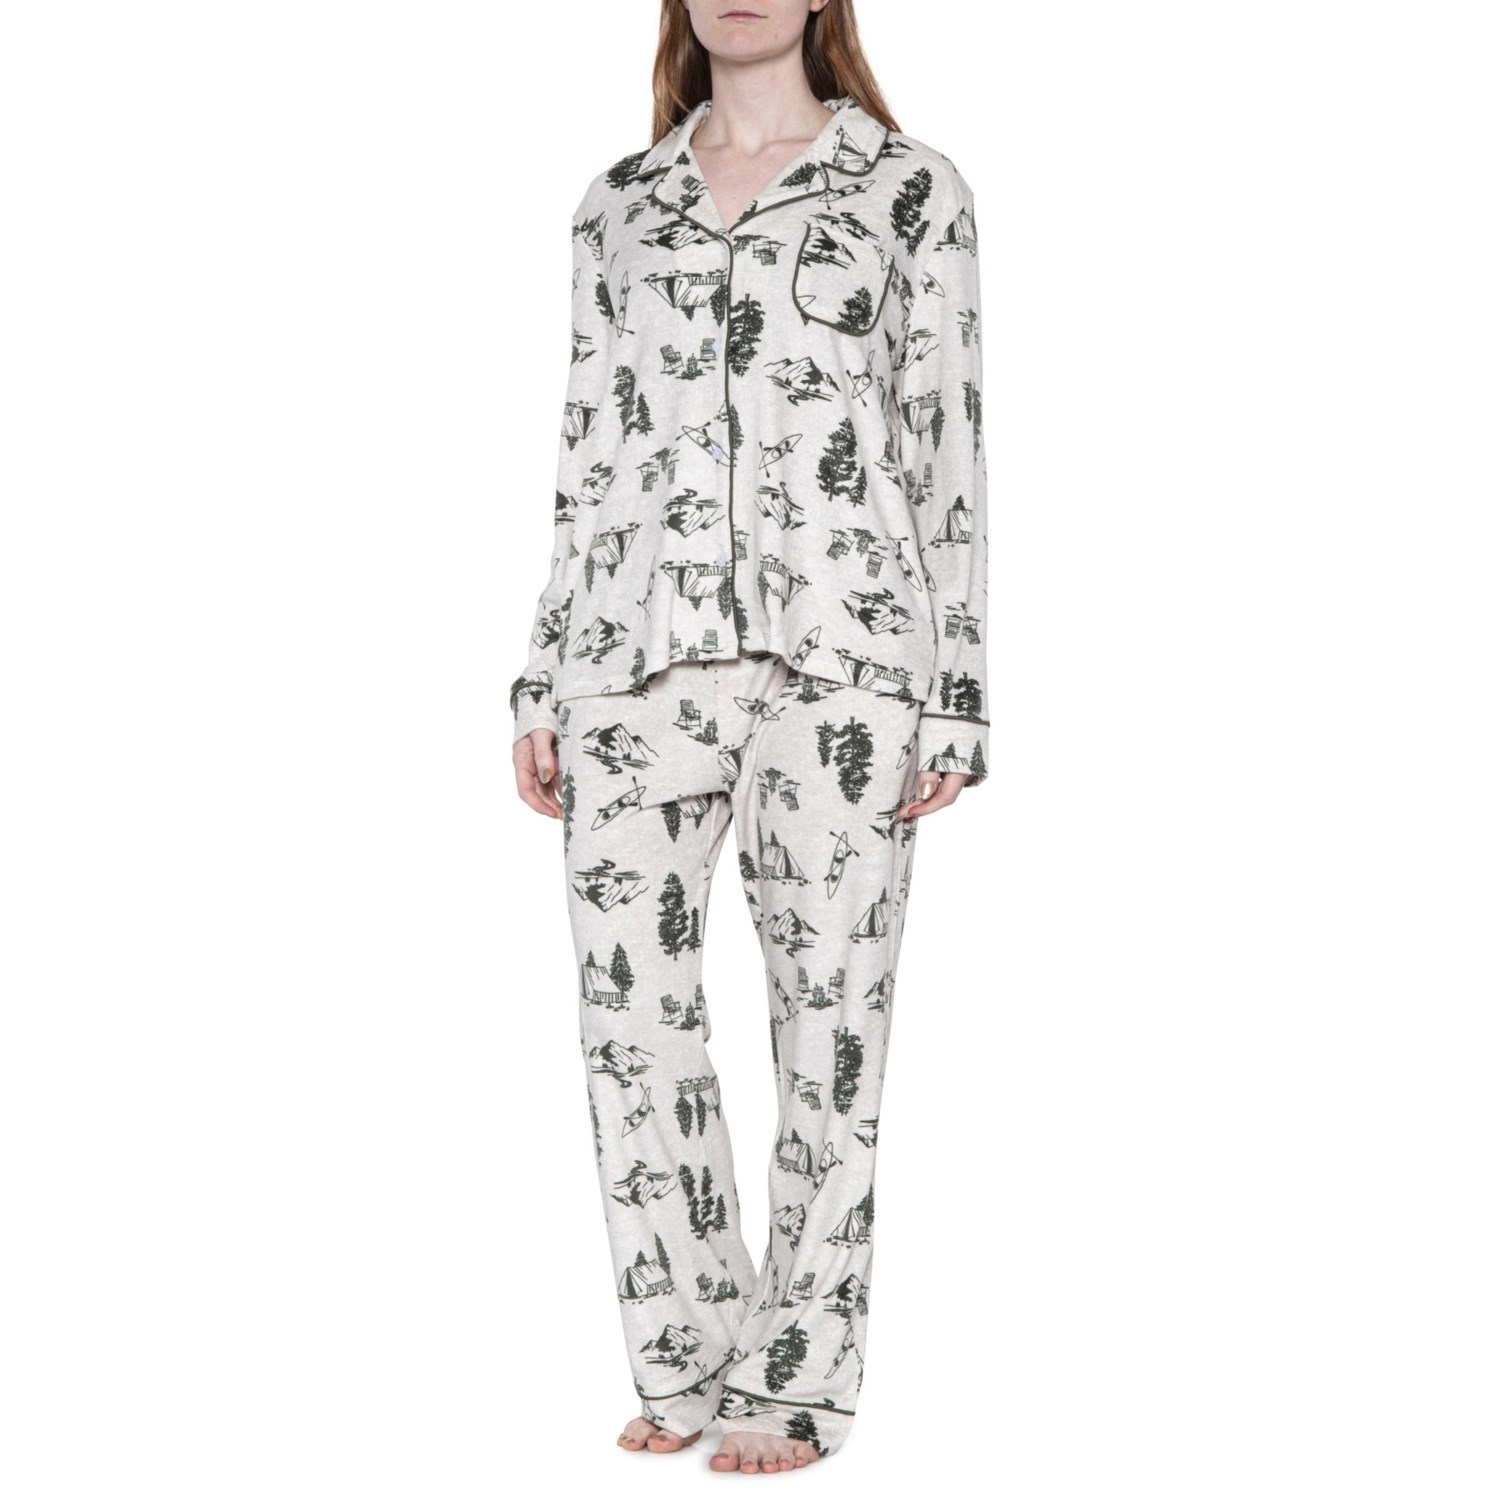 Jaclyn Camping Velour Notch Collar Pajamas - Long Sleeve - Save 54%